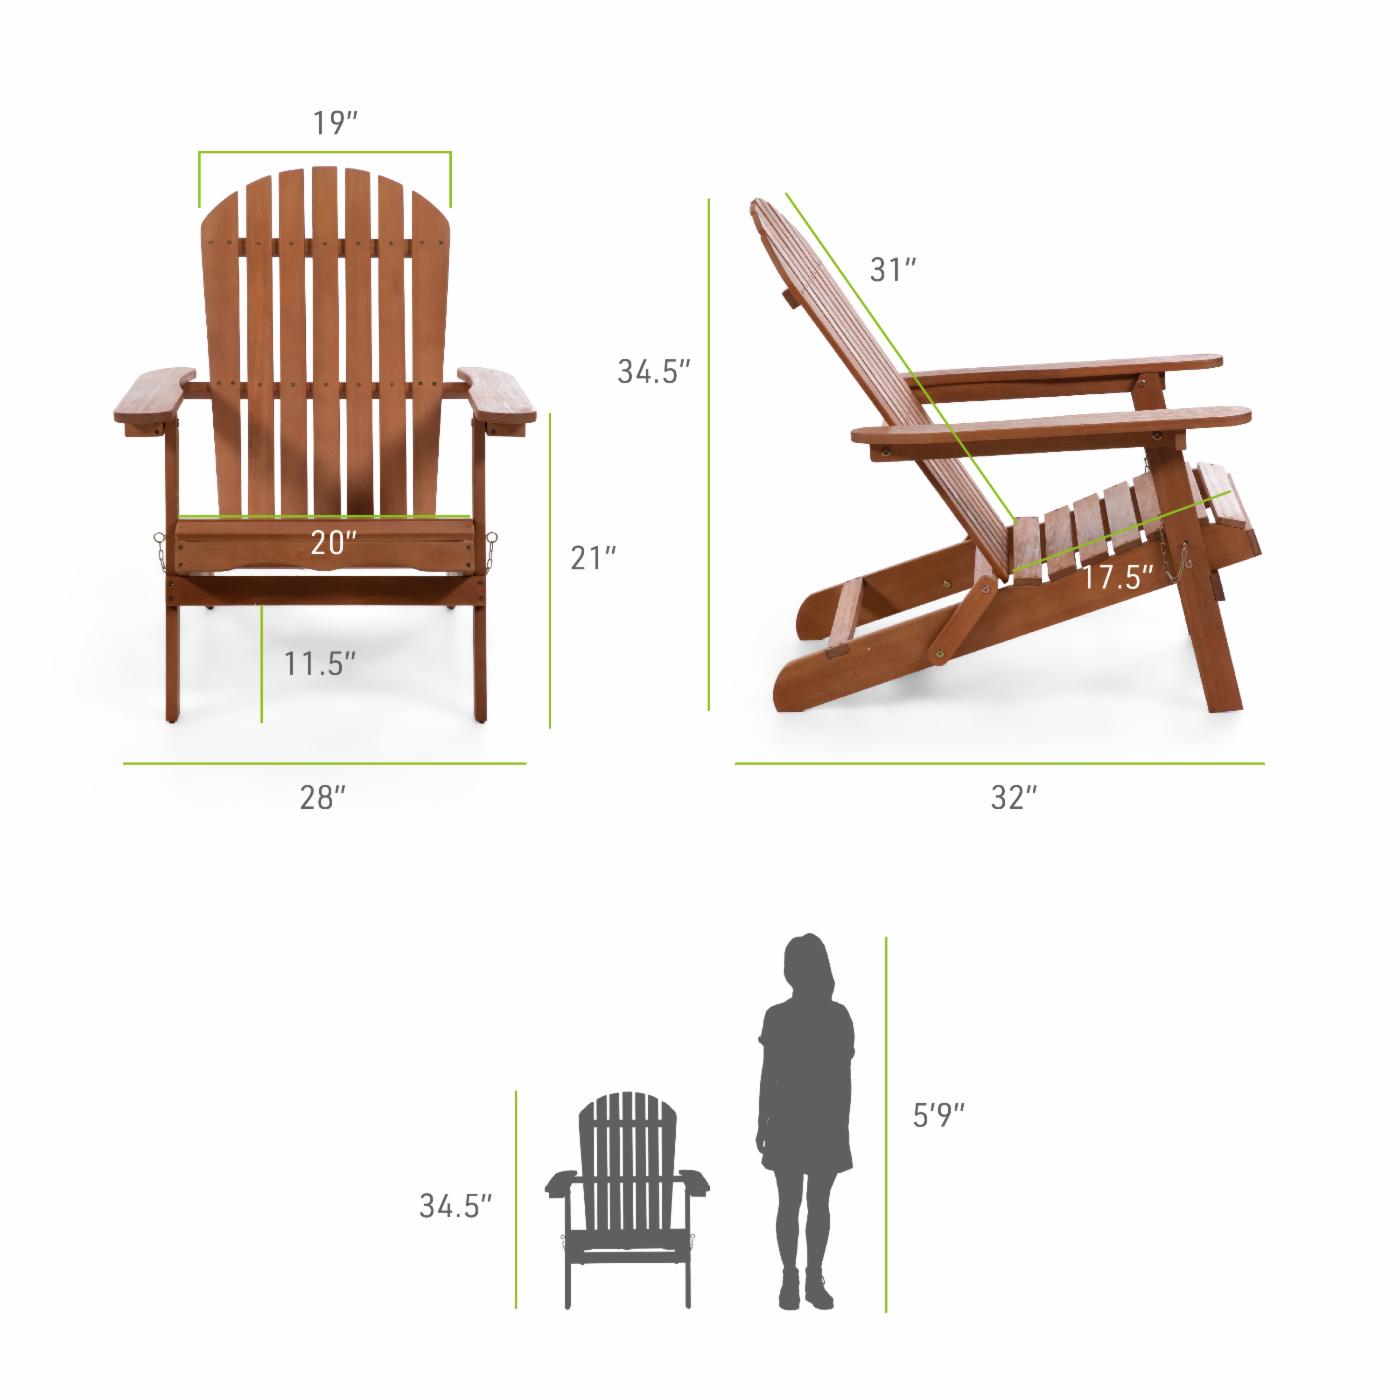 Solid Eucalyptus Wood Folding Adirondack Chair - Natural